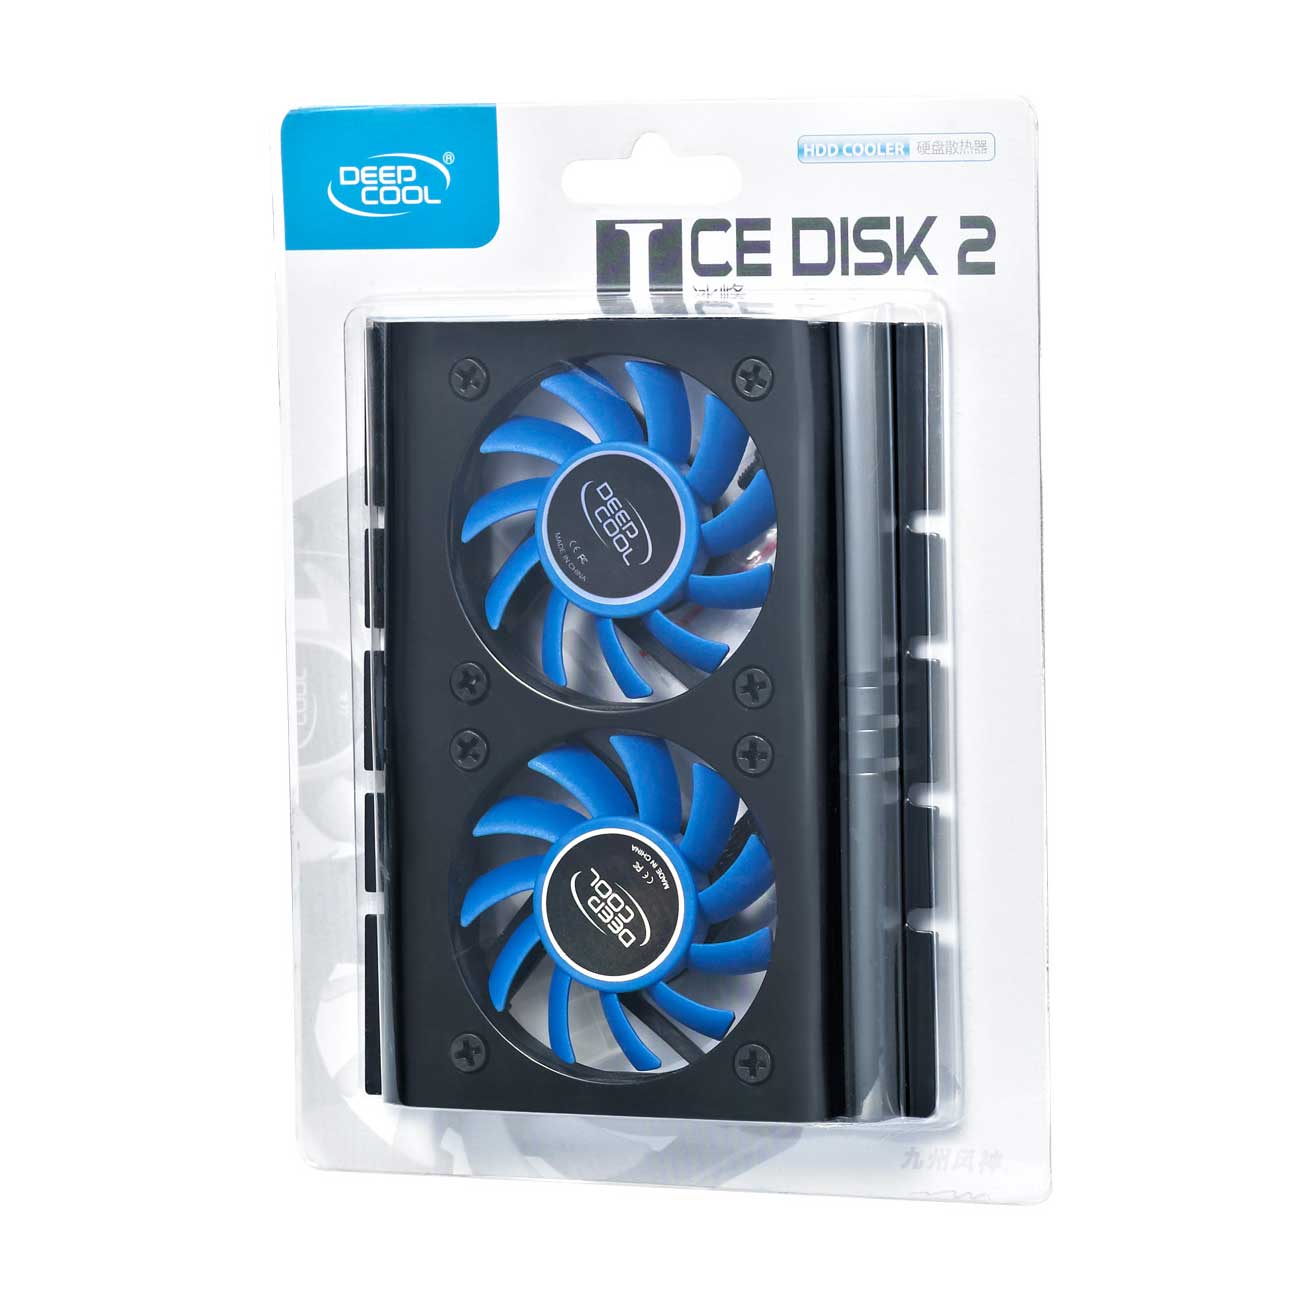 خنک کننده هارد دیسک دیپ کول DEEPCOOL ICE DISK 2